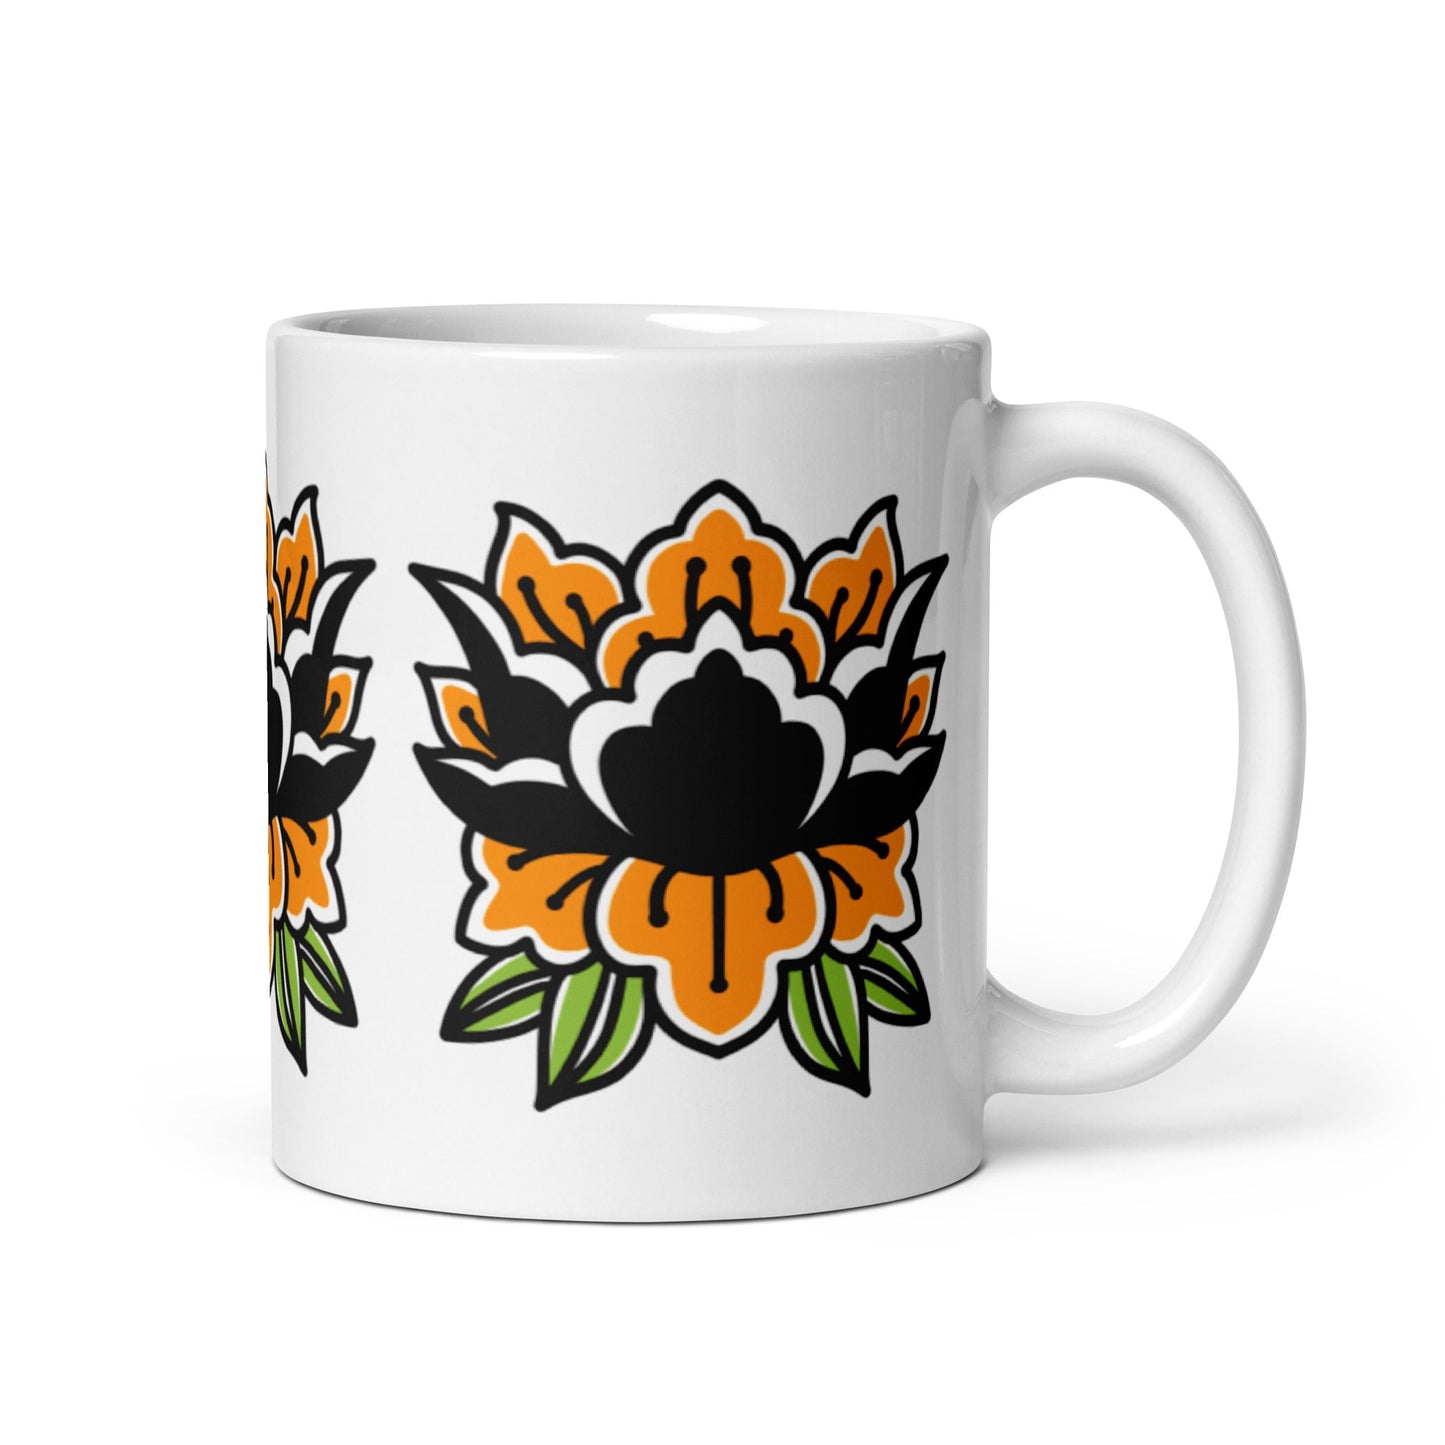 Flourish Floral Mug